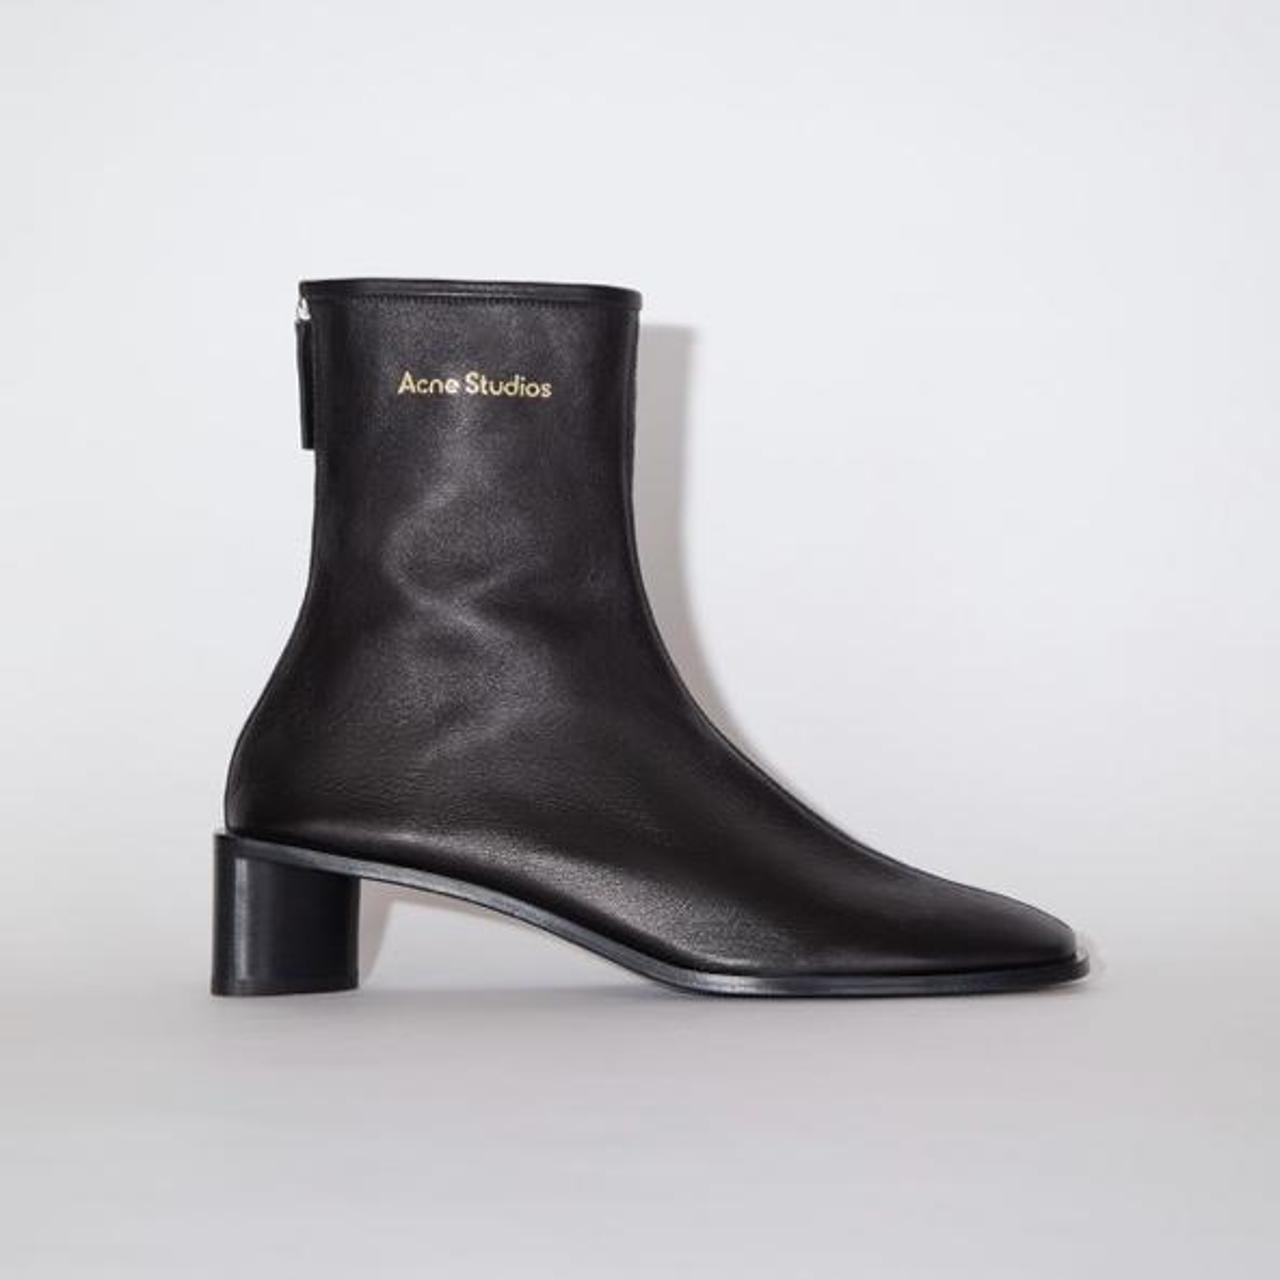 Acne Studios leather logo ankle boots black size 4... - Depop